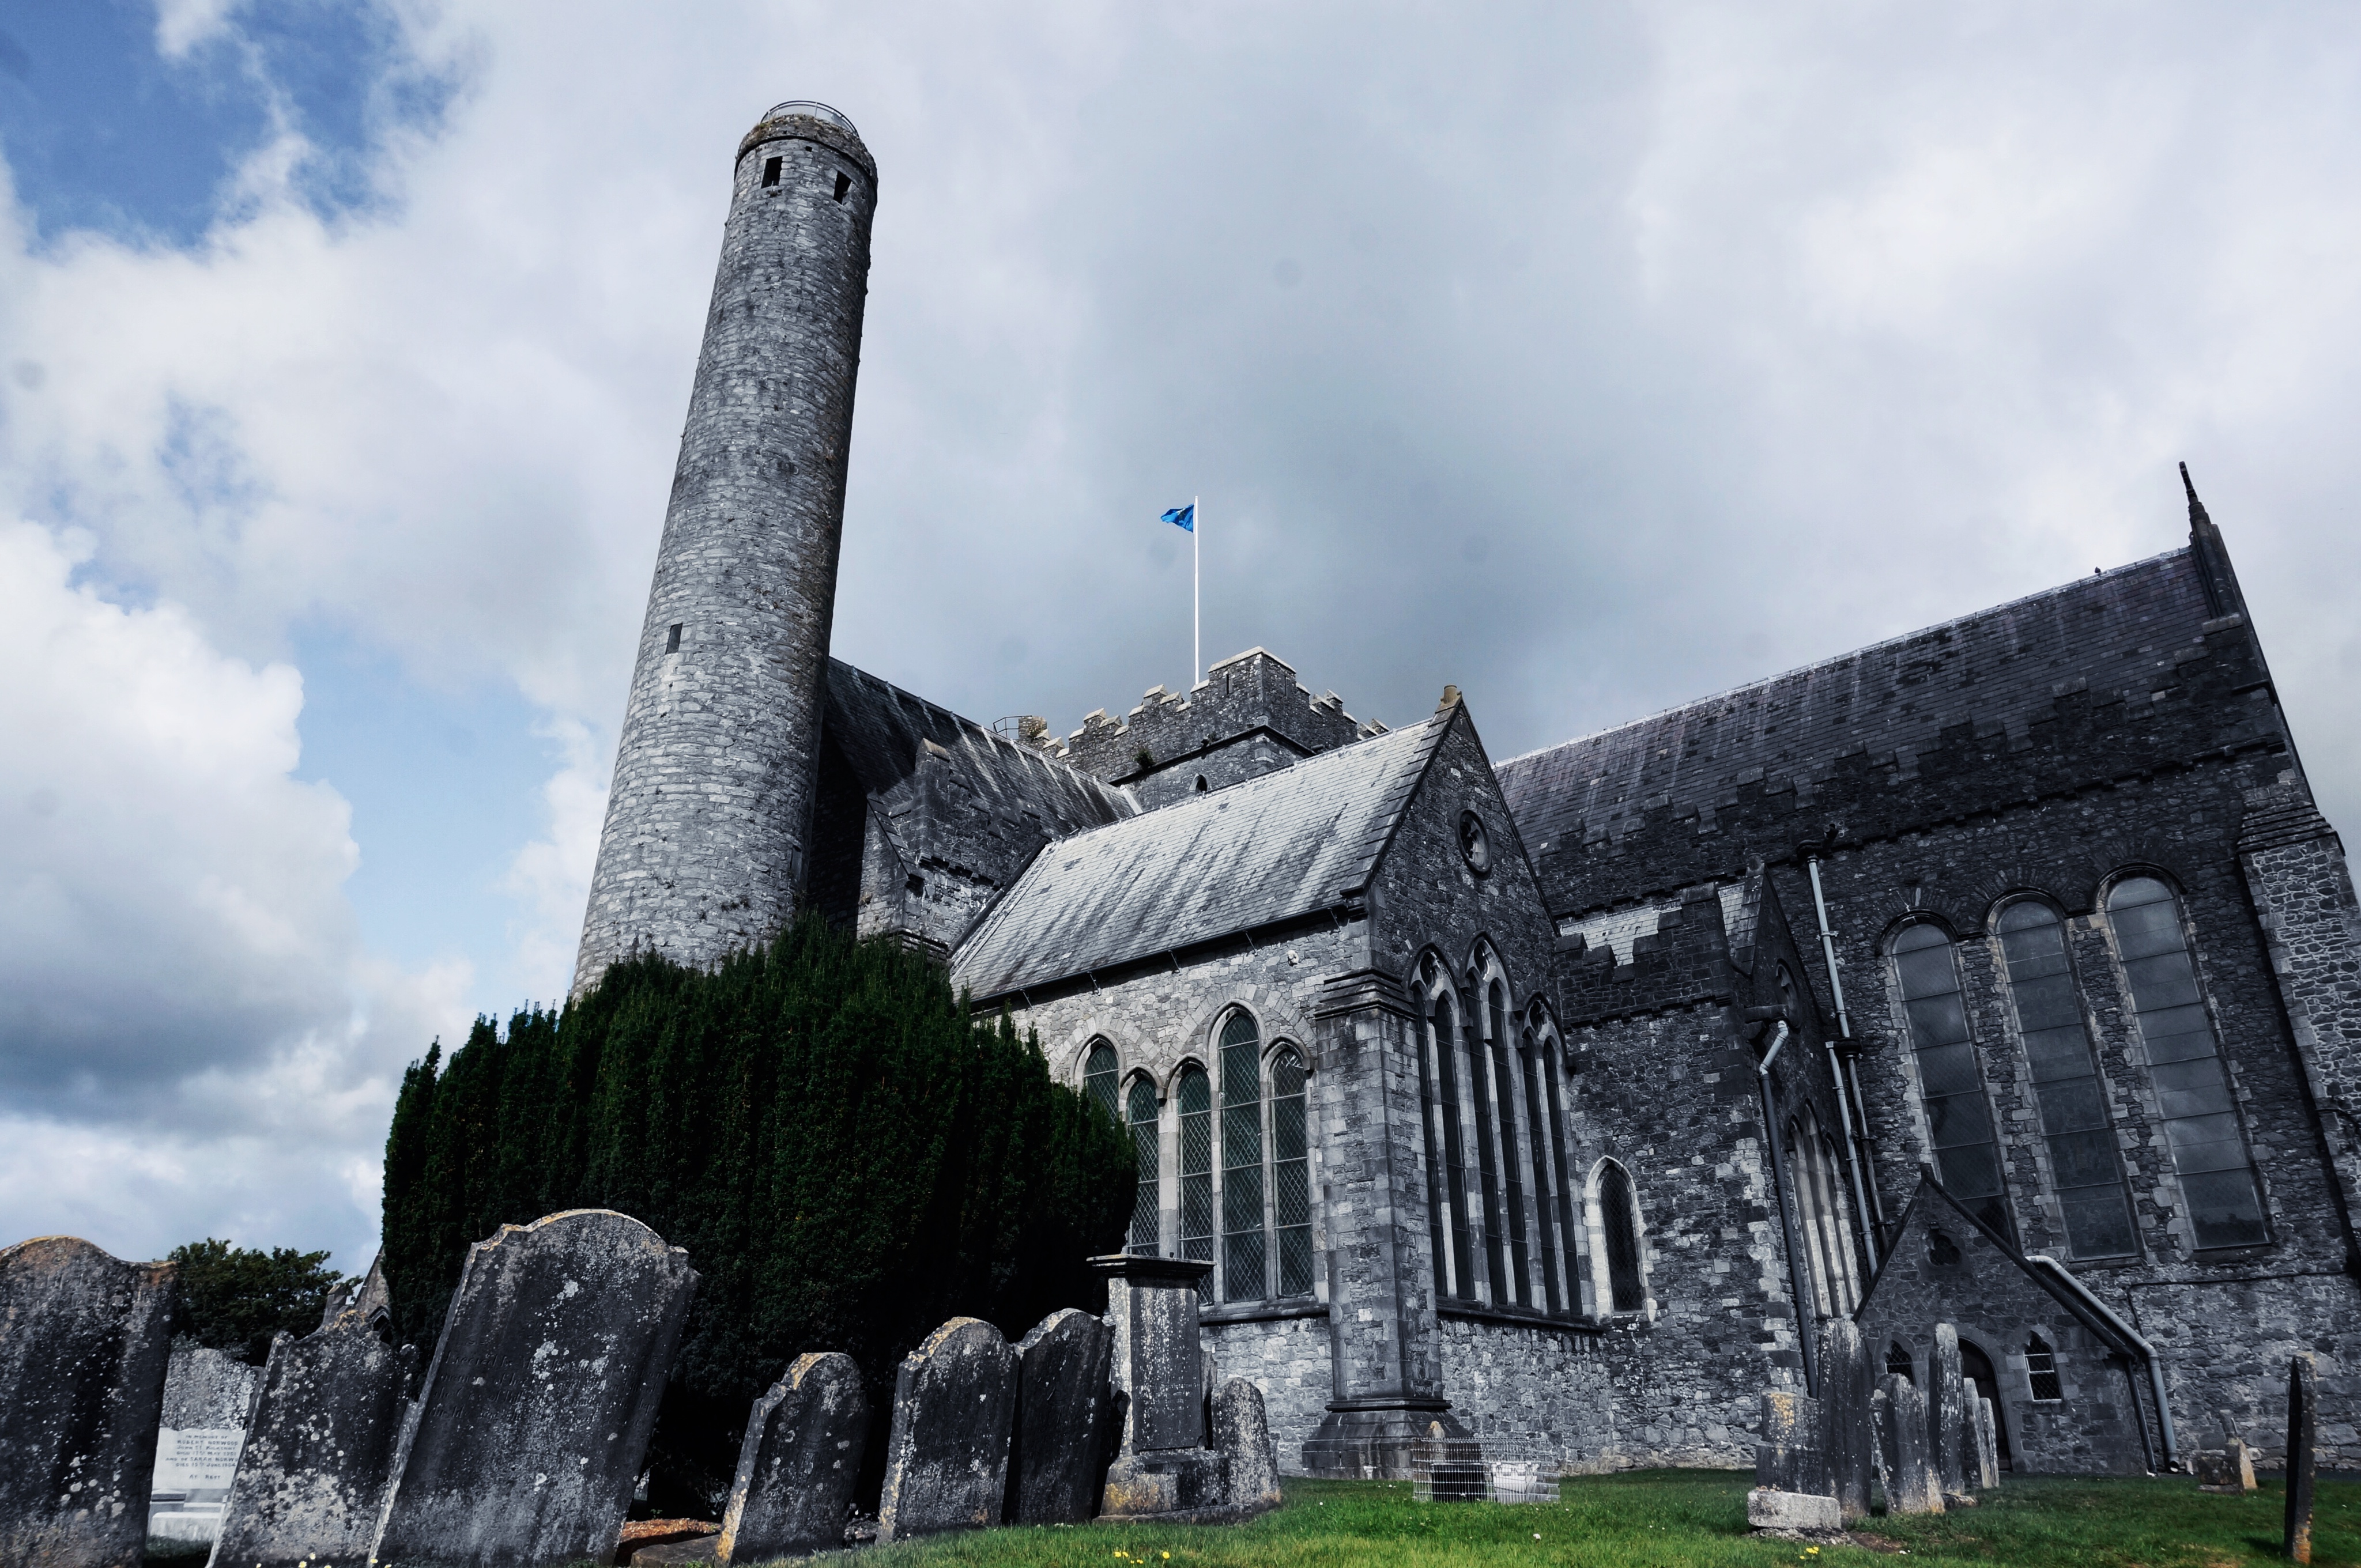 Irland, Kirche, Turm, in Irland, Sehenswürdigkeiten, Highlights, Turm, Irland, Kilkenny